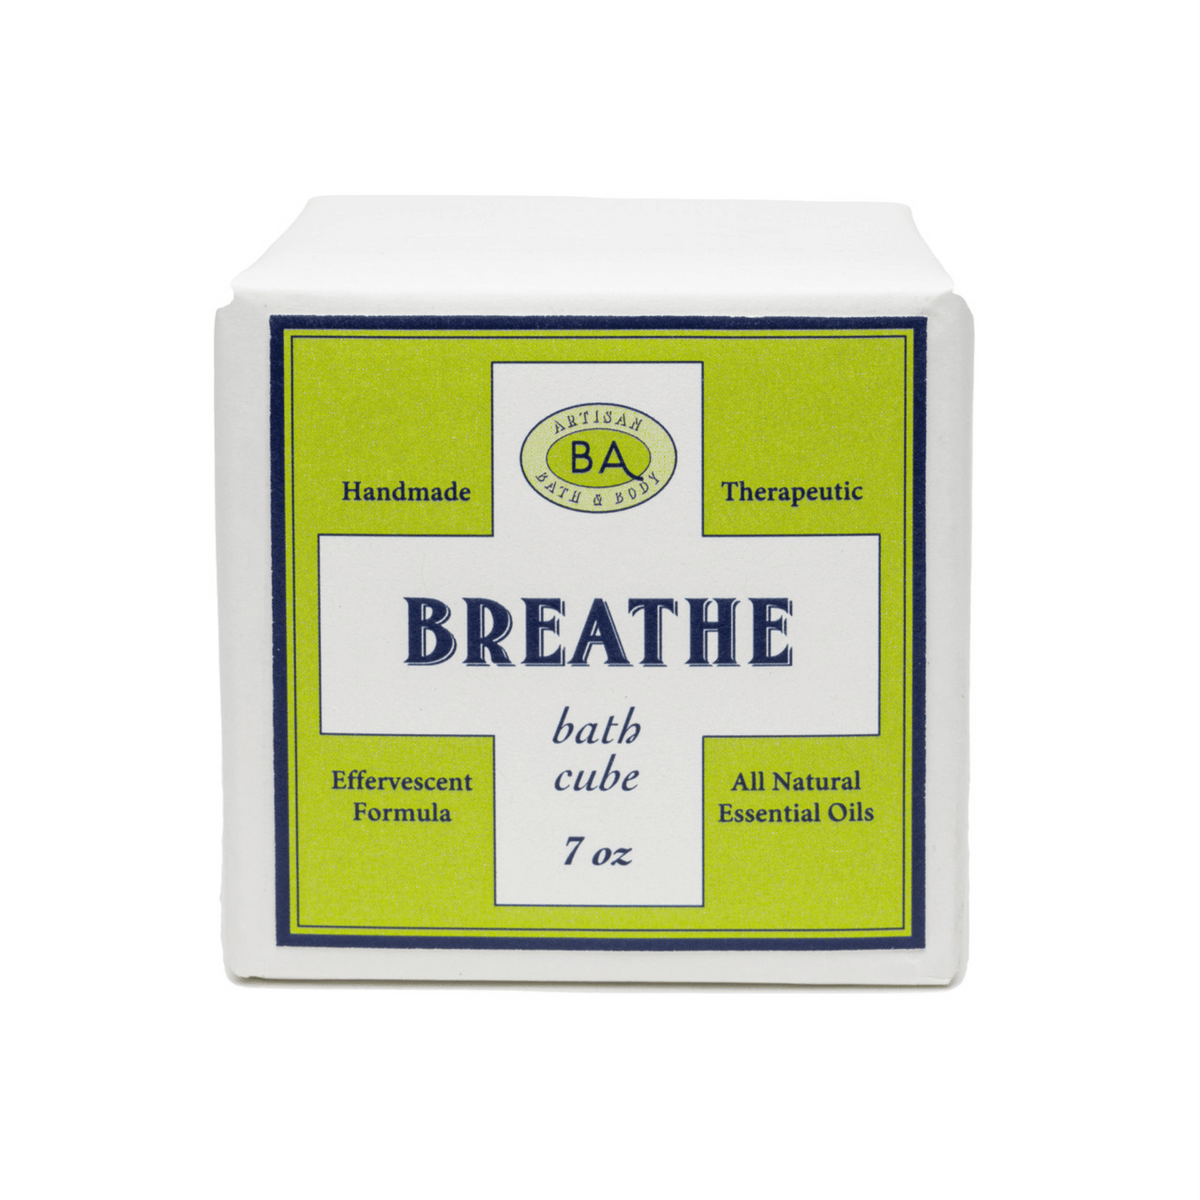 Primary Image of Breathe Bath Cube